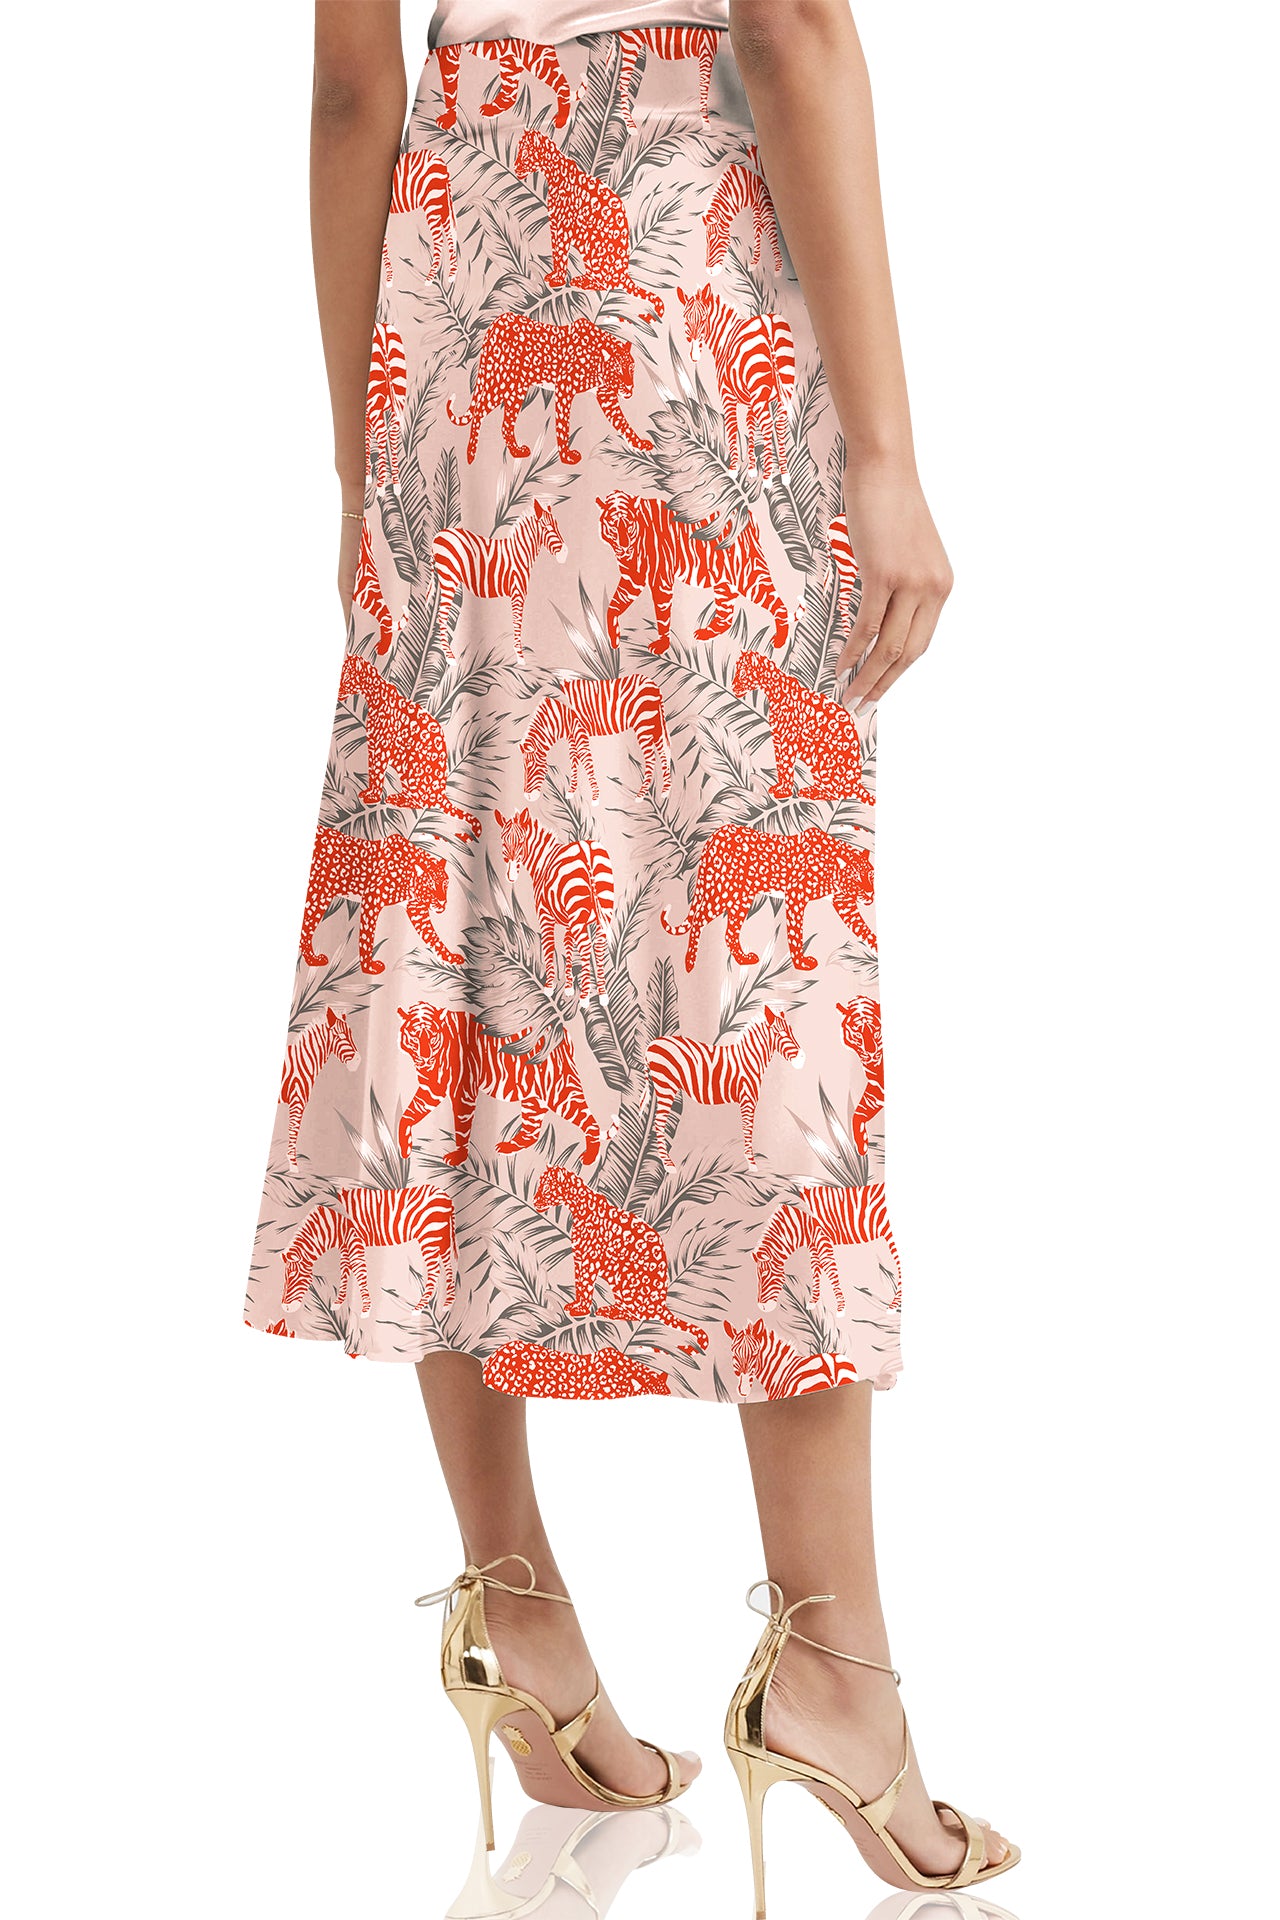 Made WIth Cupro Zebra Print Skirt In Orange